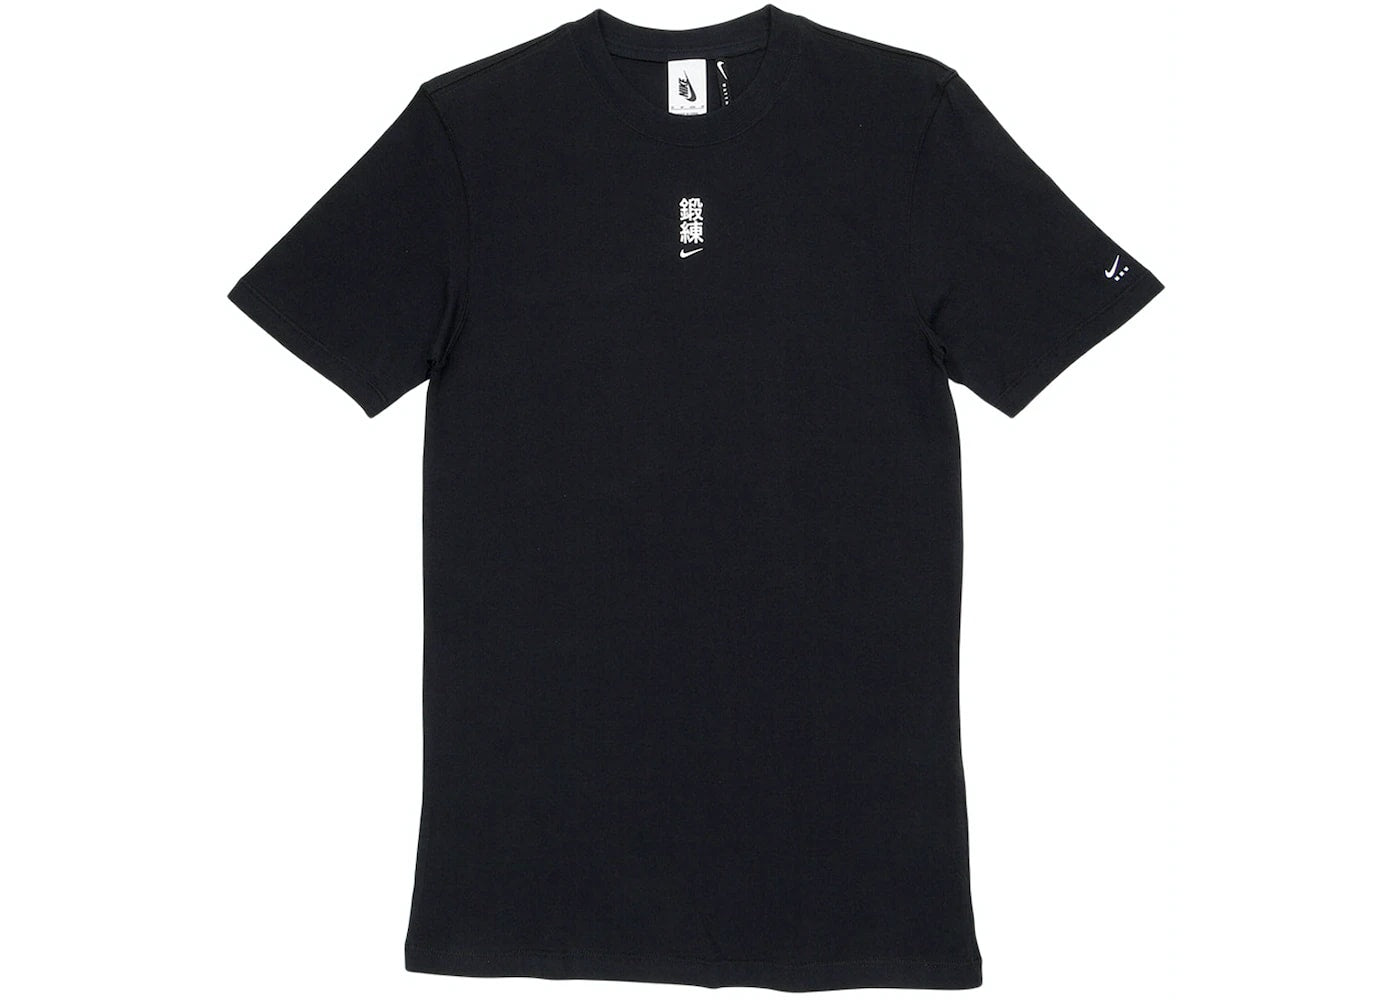 Nike x MMW T-shirt Black